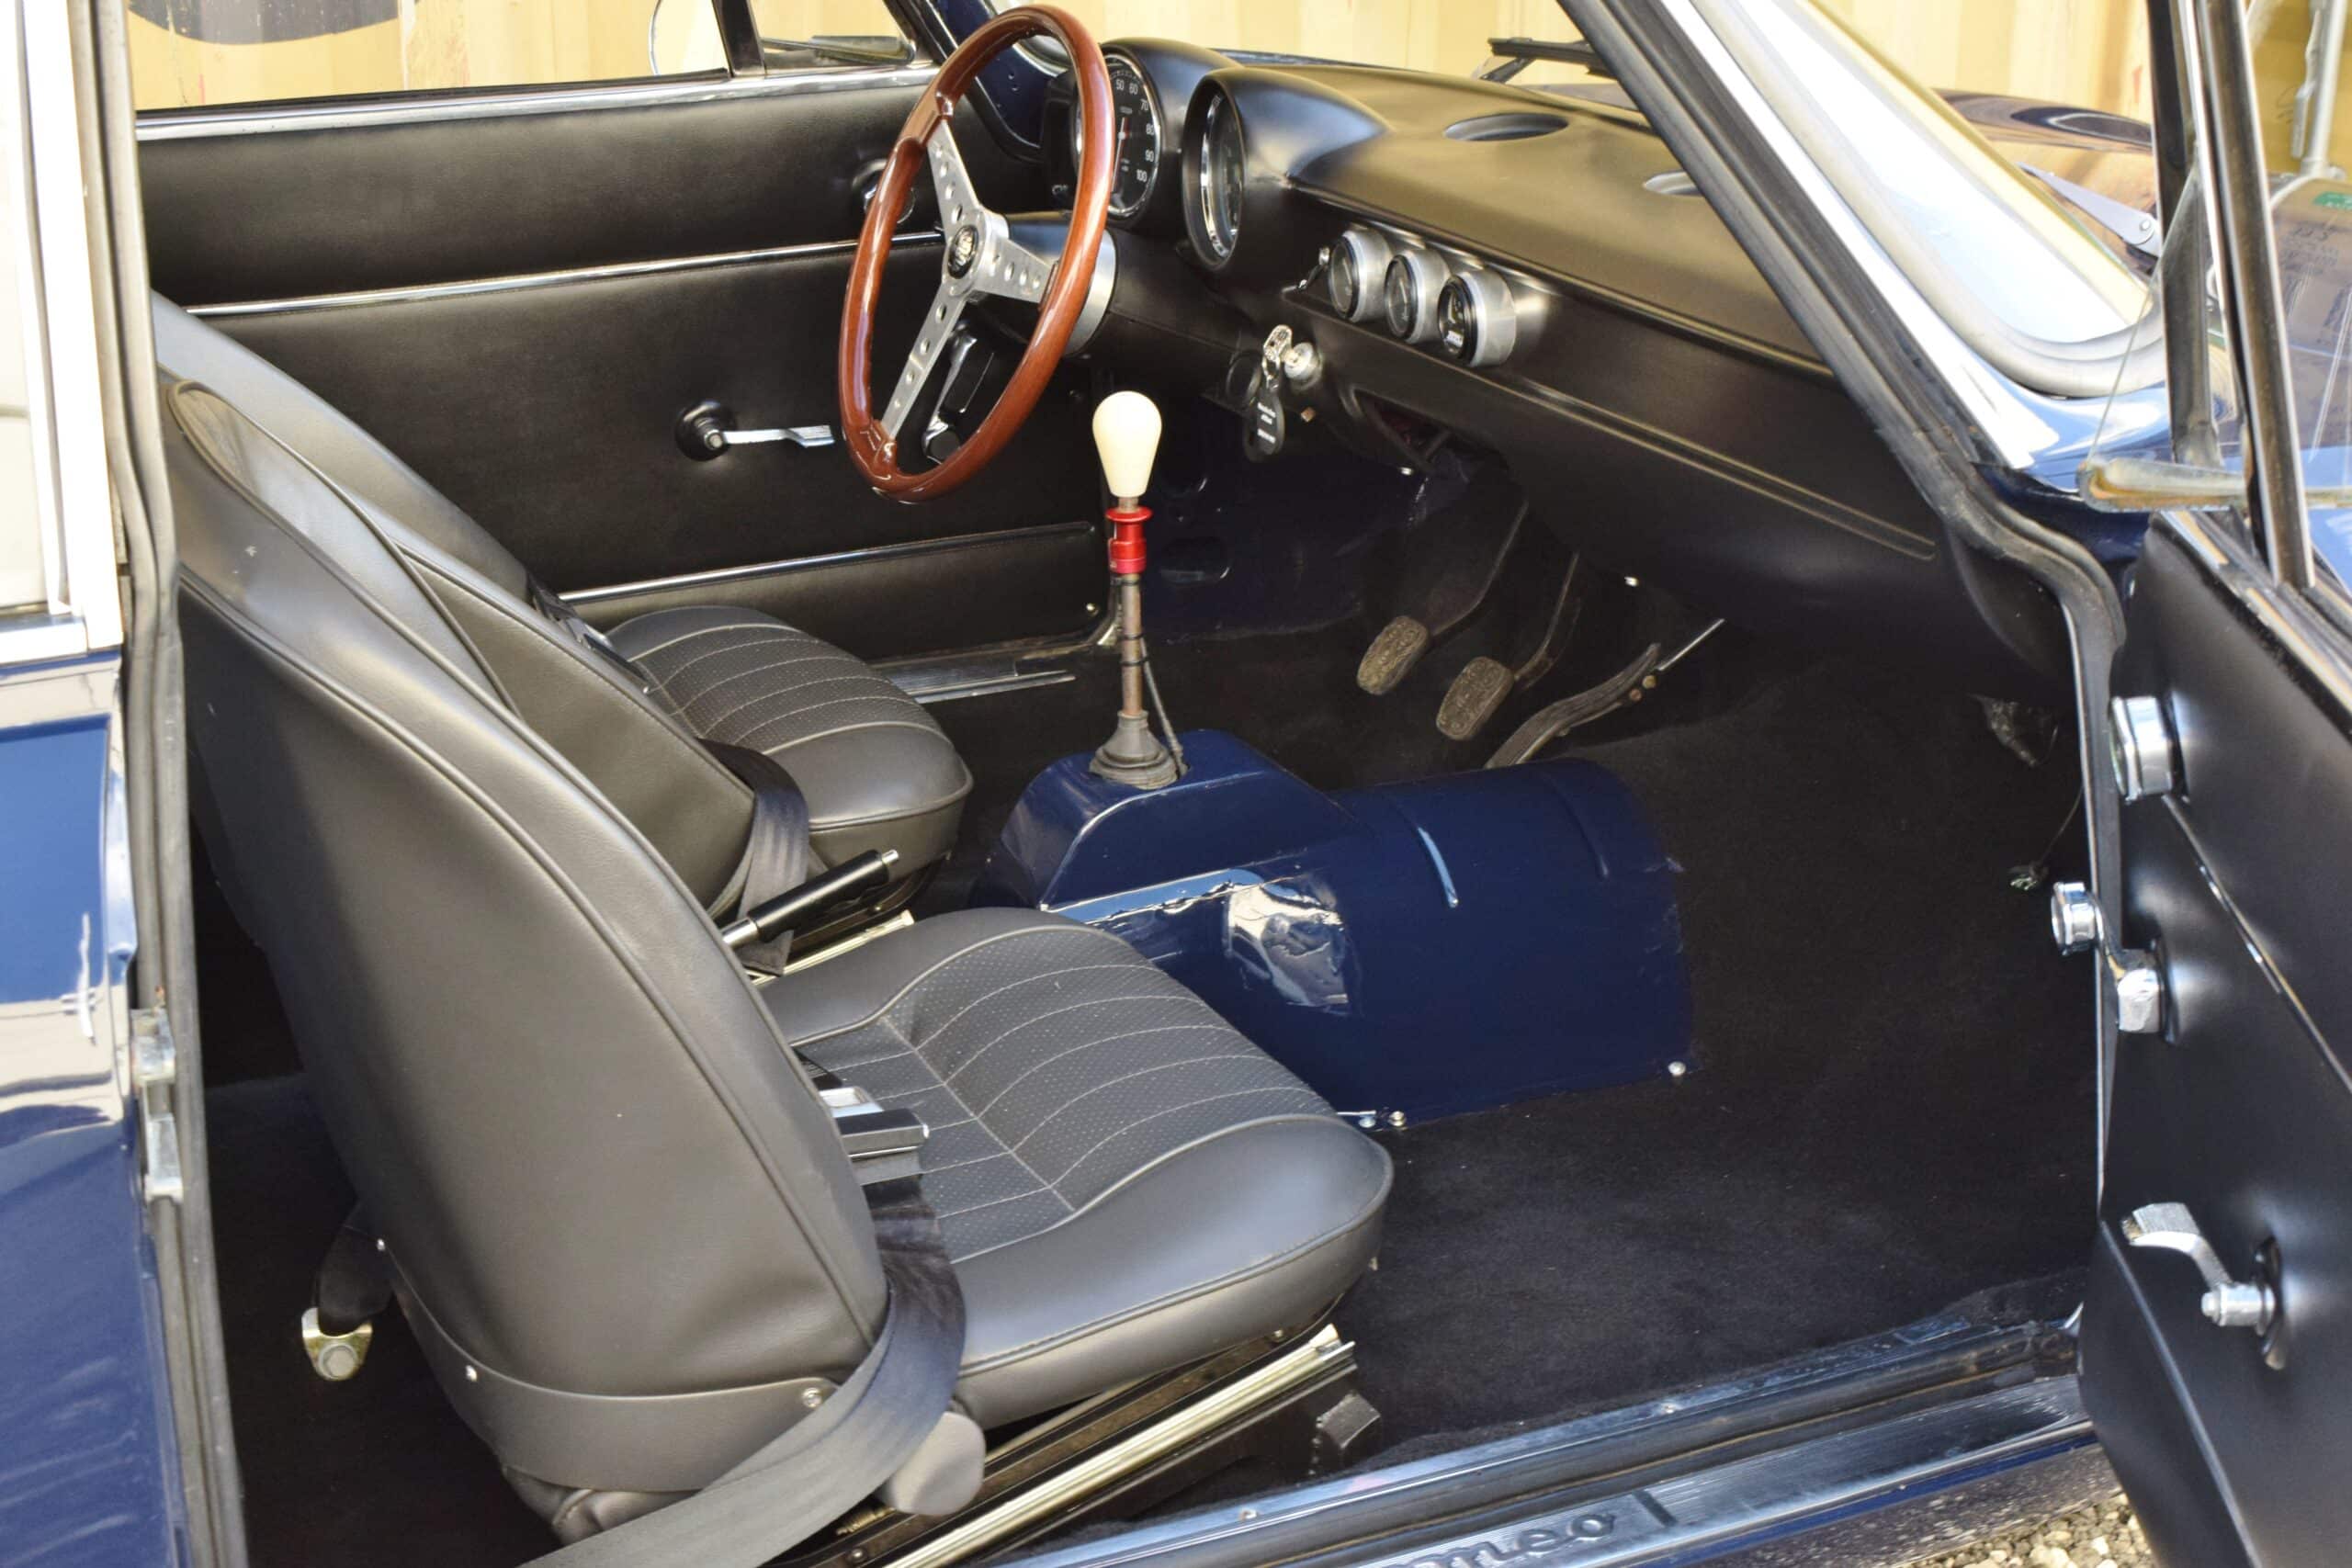 1971 Alfa Romeo GTV GTAM Tribute Alfaholics Built 2.0L Twin Plug Quaife Sequential trans- GTAM Brakes/ Suspension